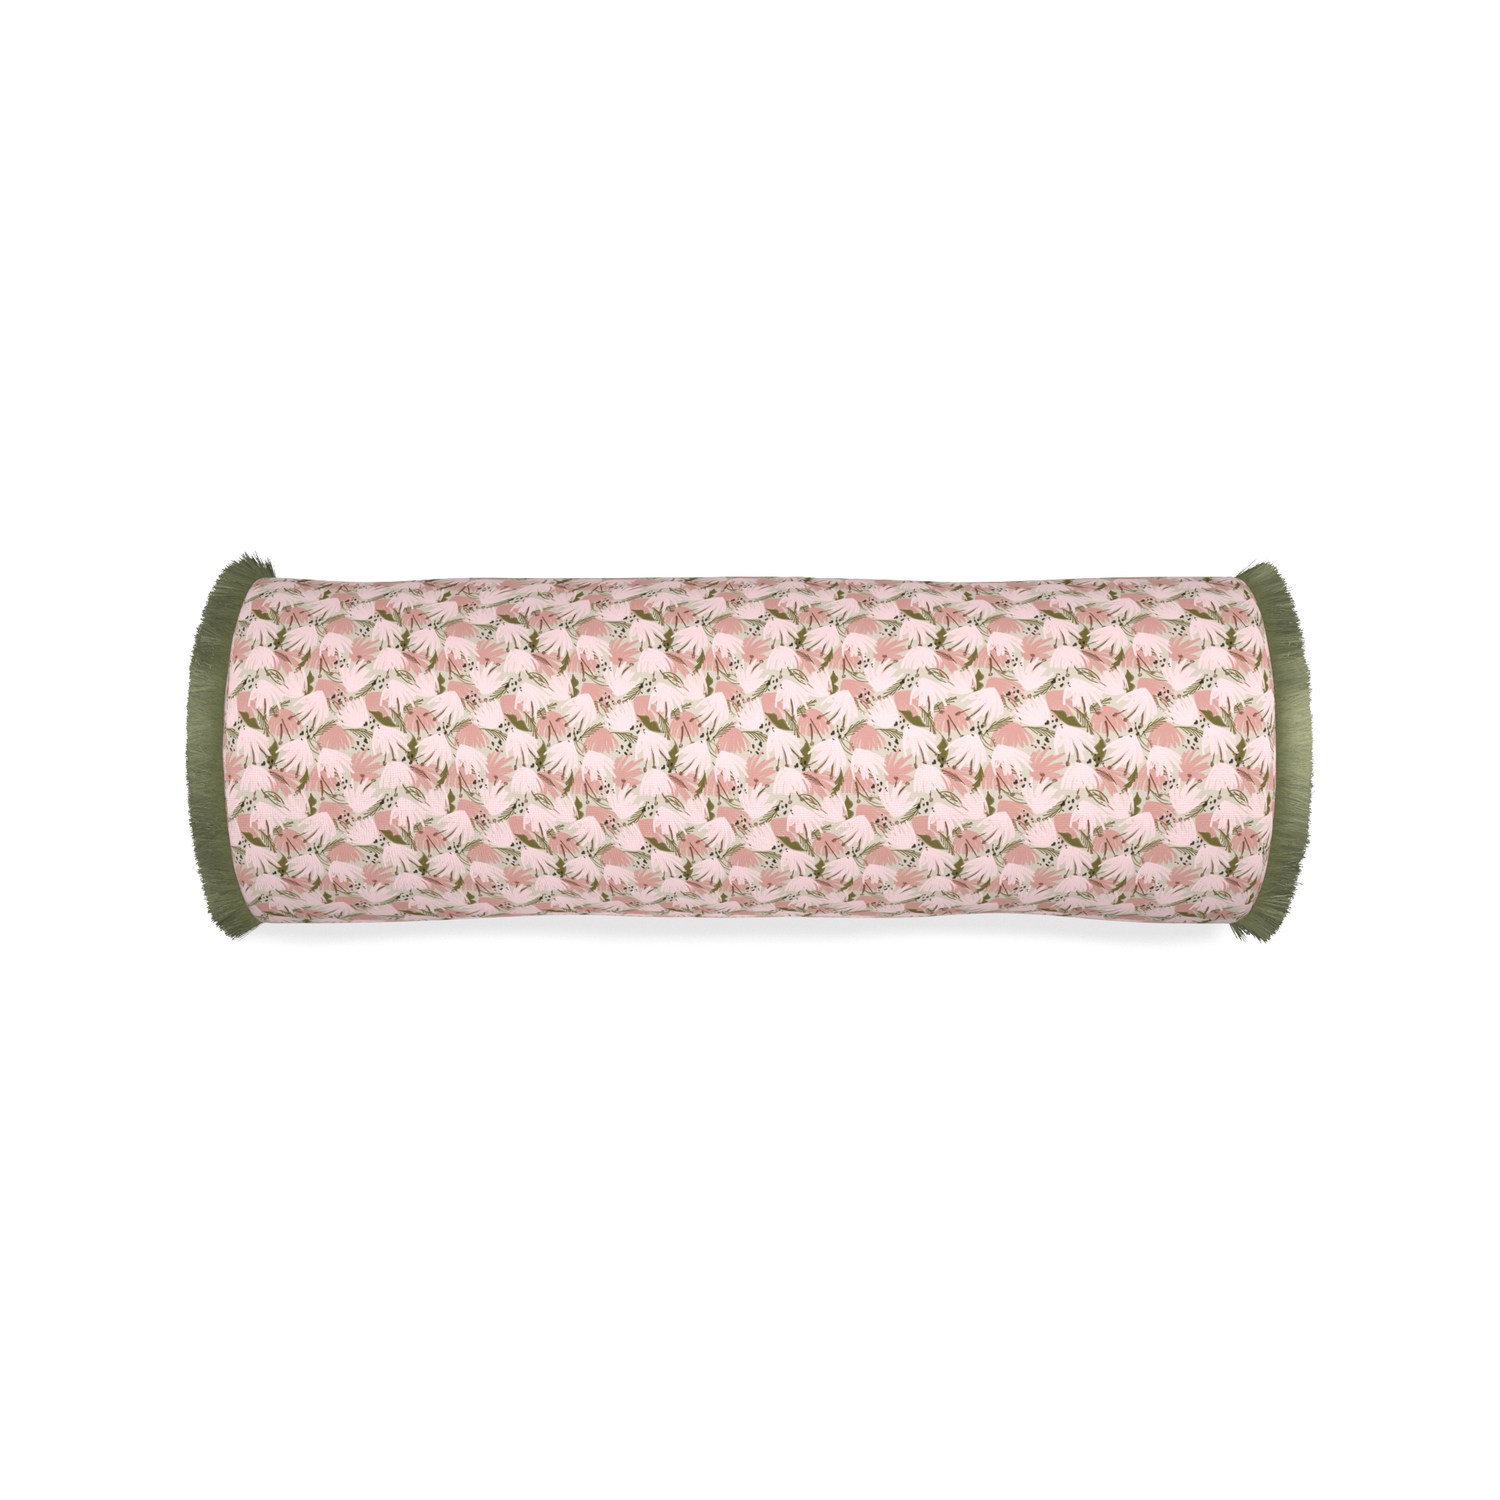 Bolster eden pink custom pink floralpillow with sage fringe on white background